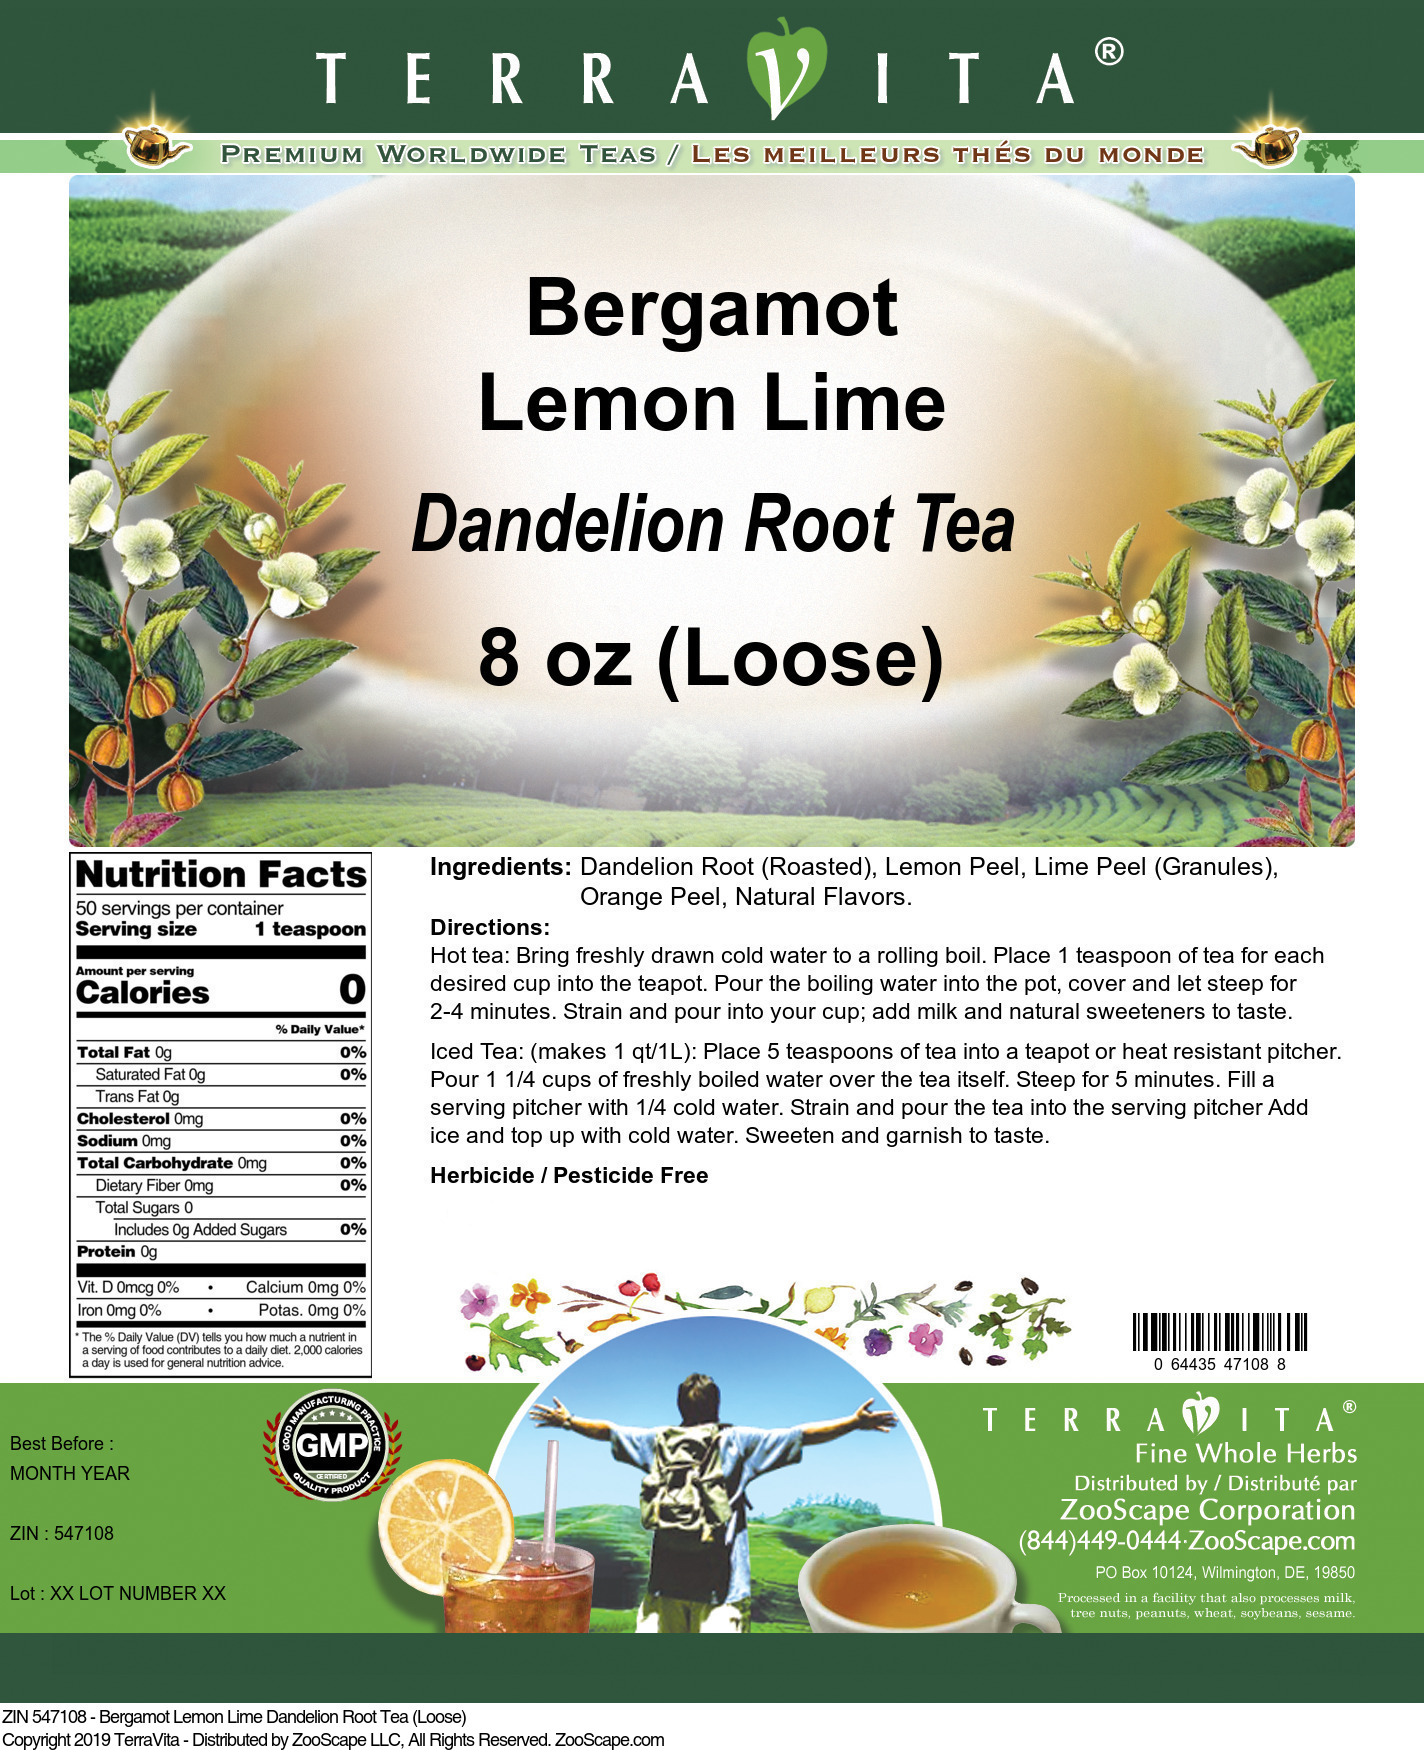 Bergamot Lemon Lime Dandelion Root Tea (Loose) - Label